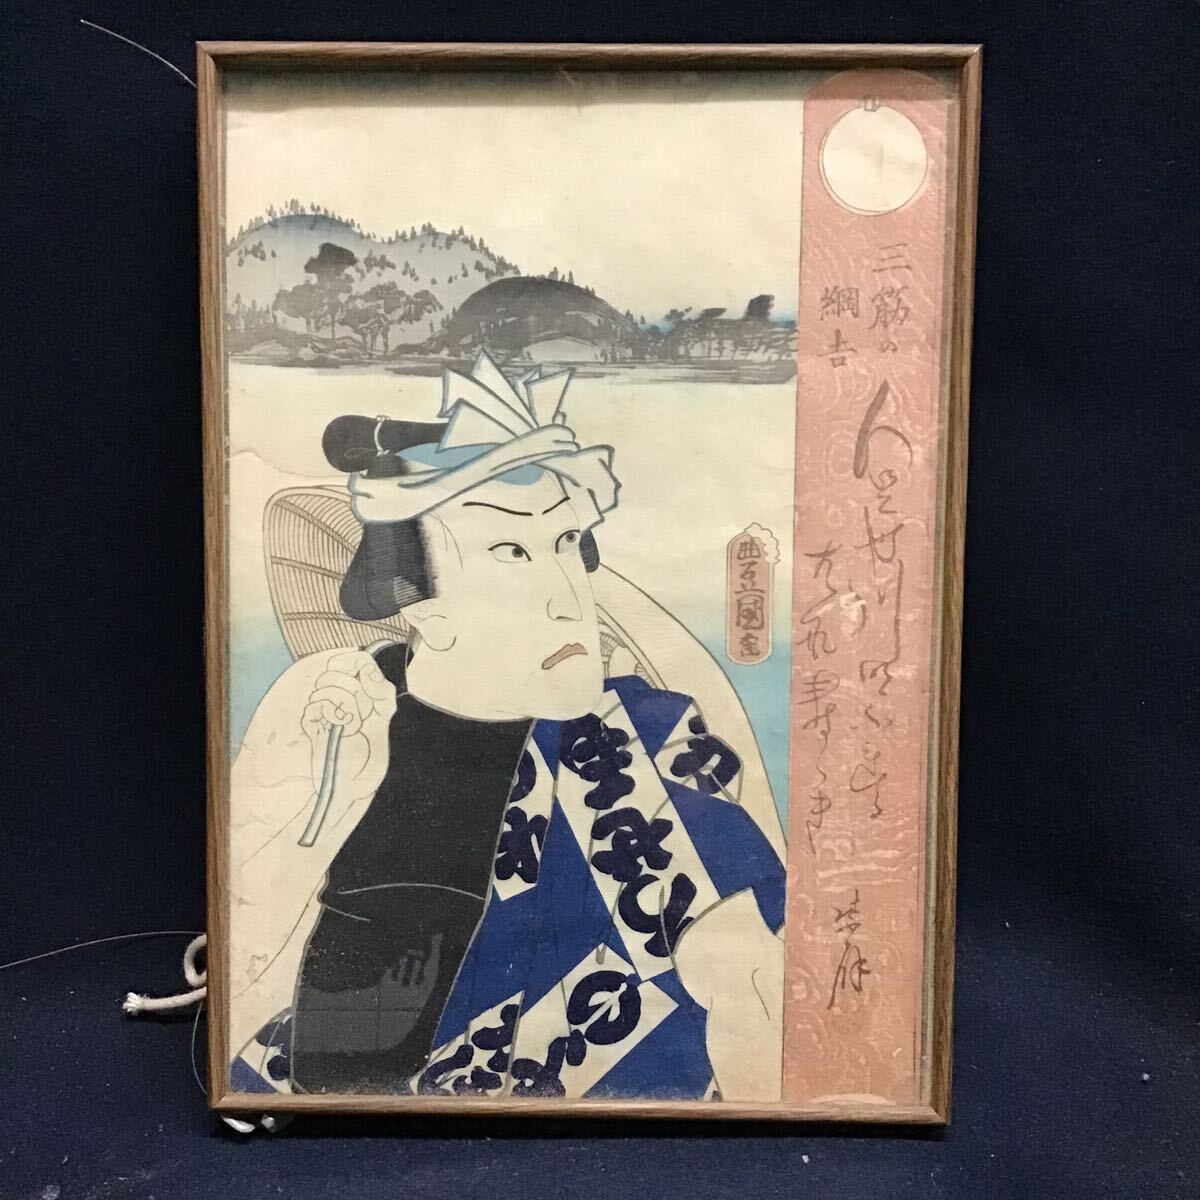 [Authentisches Werk] Drei Zeilen von Tsunayoshi Utagawa Toyokuni, gerahmter Koizumi Kenbori-Holzschnitt, Ukiyo-e Nishiki-e, großformatiges Toyokuni-Gemälde, Malerei, Ukiyo-e, drucken, Kabuki-Bild, Schauspielerbild